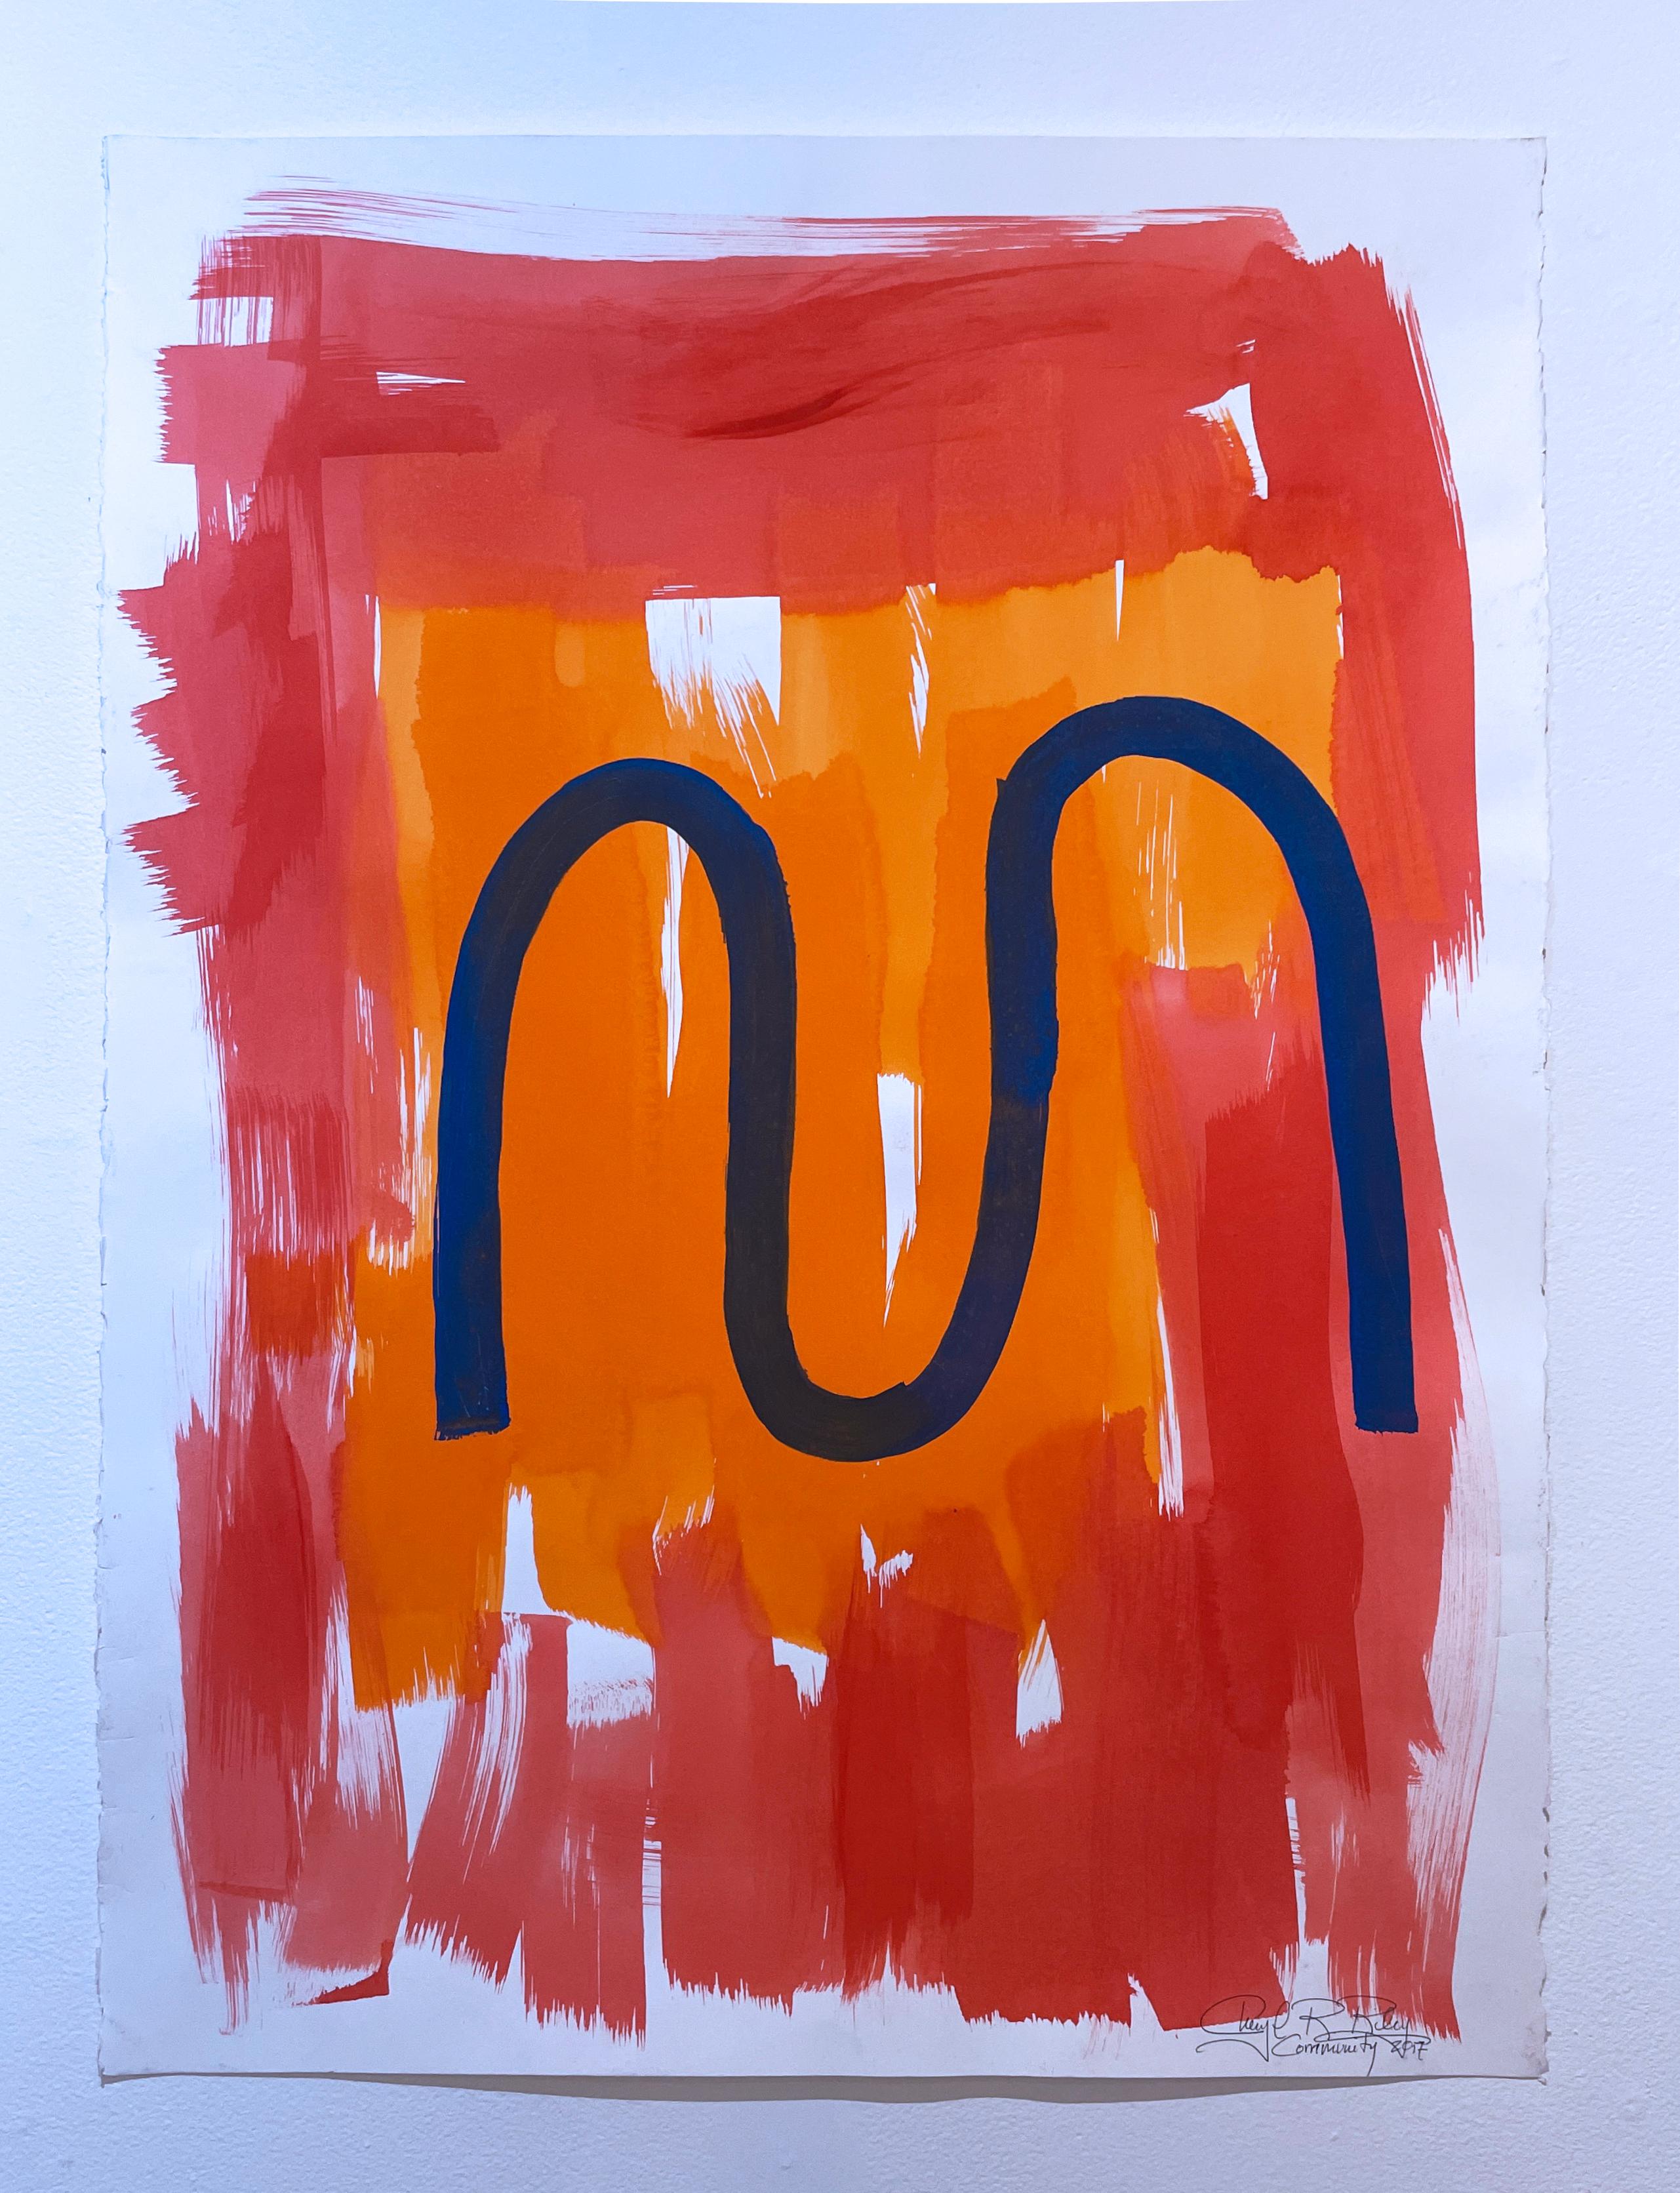 Community by Cheryl R. Riley, bright red & orange abstract geometric symbols 1